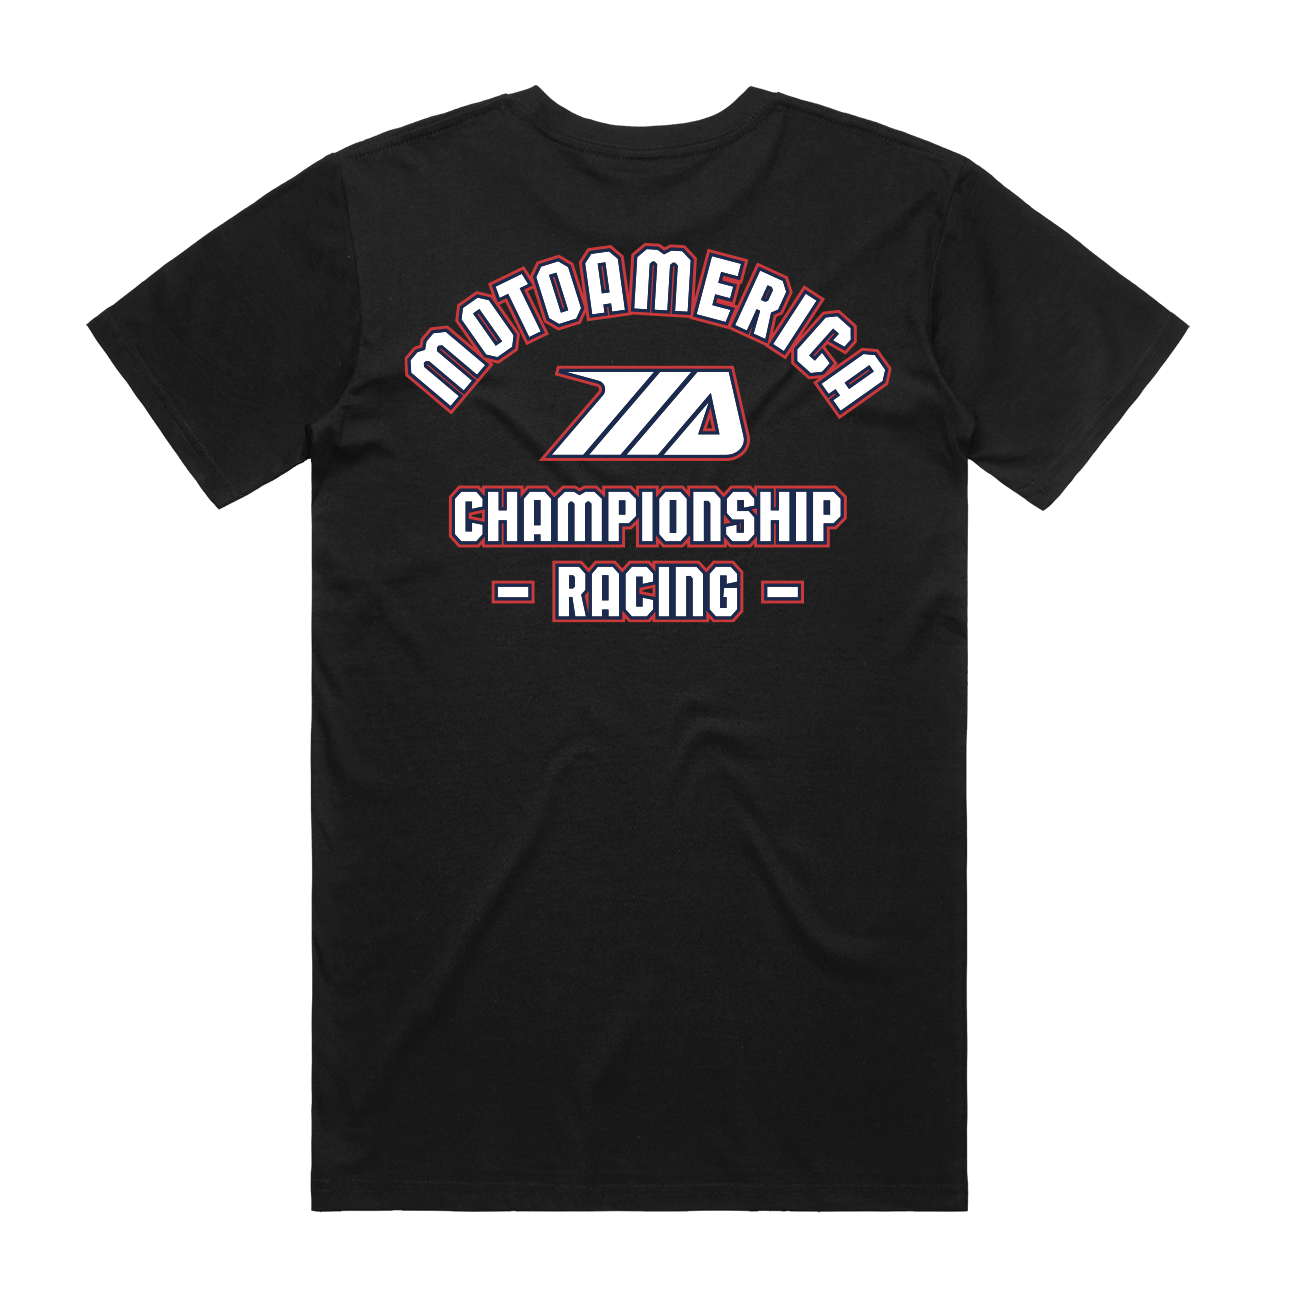 MotoAmerica Championship Racing Tee, Black